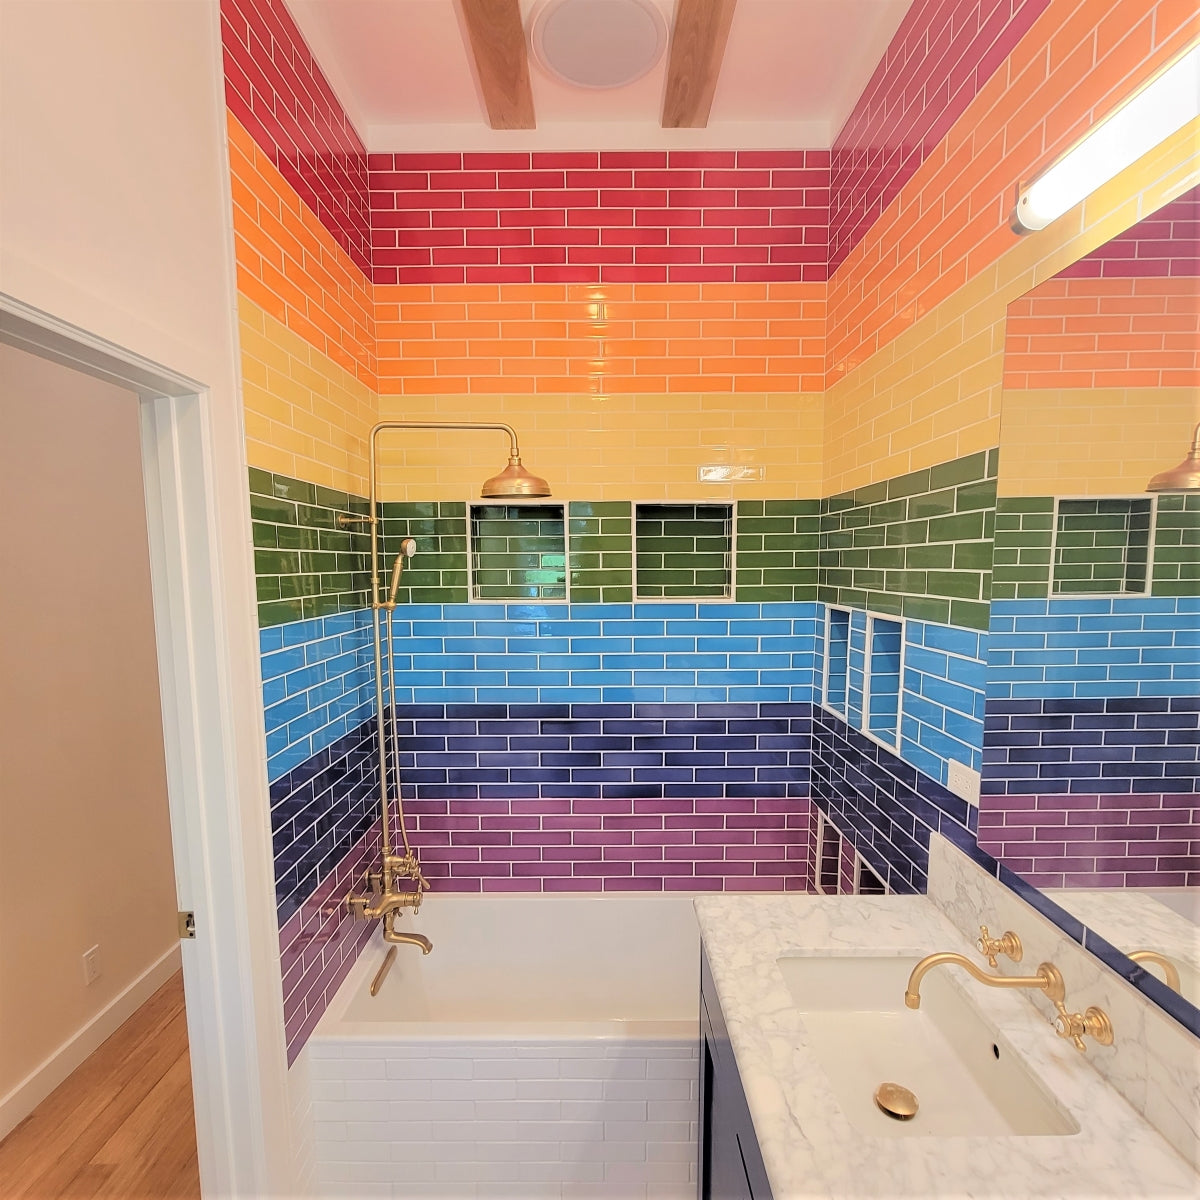 Modwalls Basis Handmade Ceramic Tile | 2x8 Rainbow | Modern tile for backsplashes, kitchens, bathrooms, showers & feature areas. 